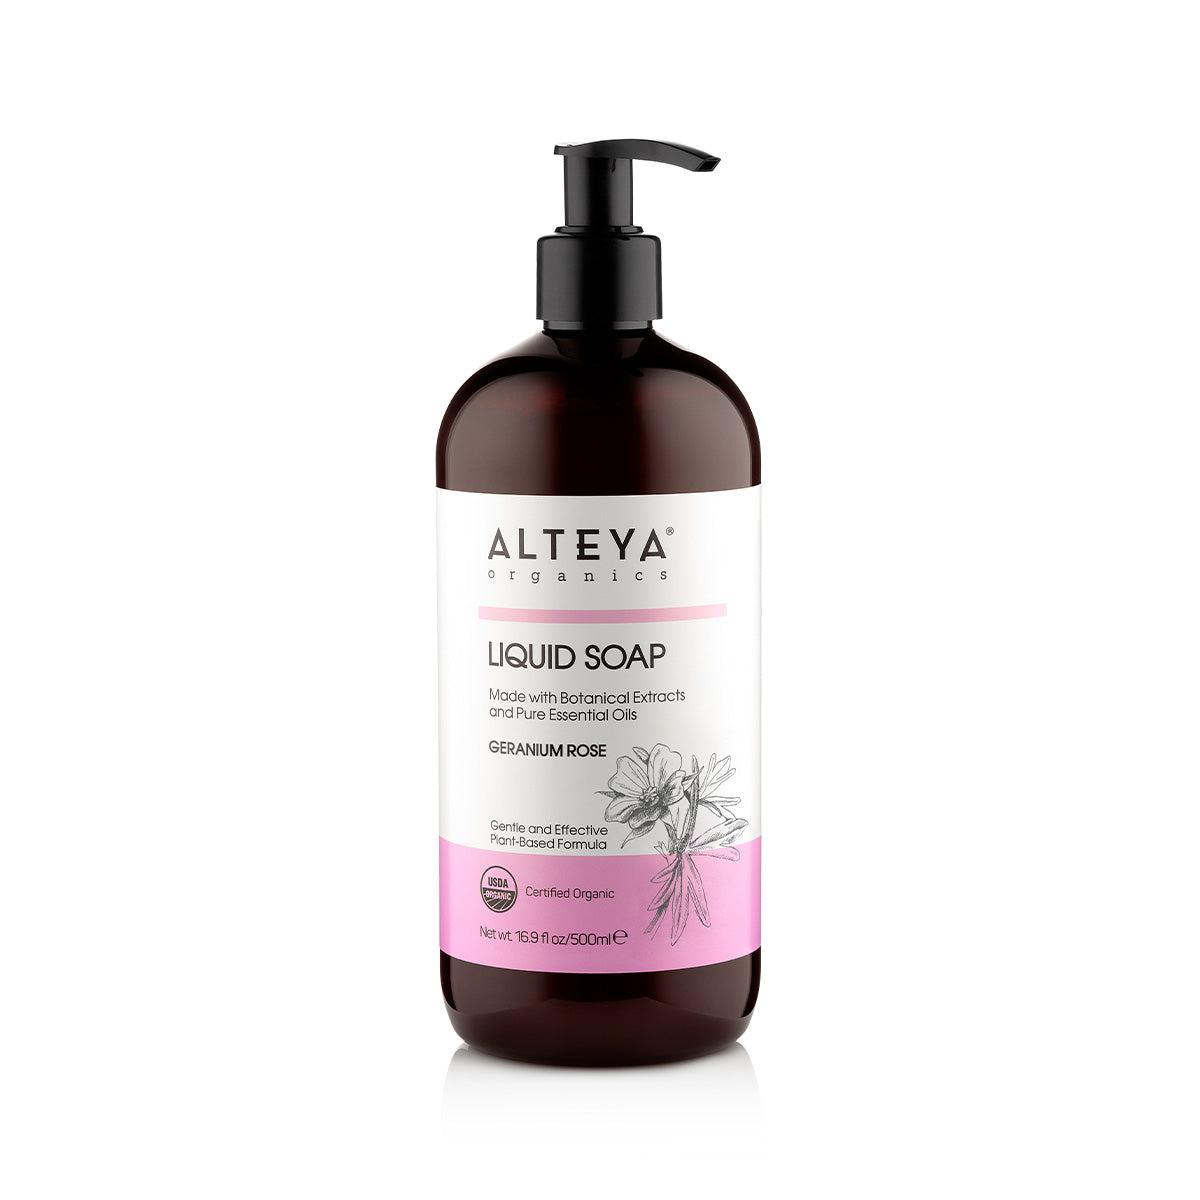 A bottle of Alteya Organics Liquid Soap Geranium Rose on a white background.